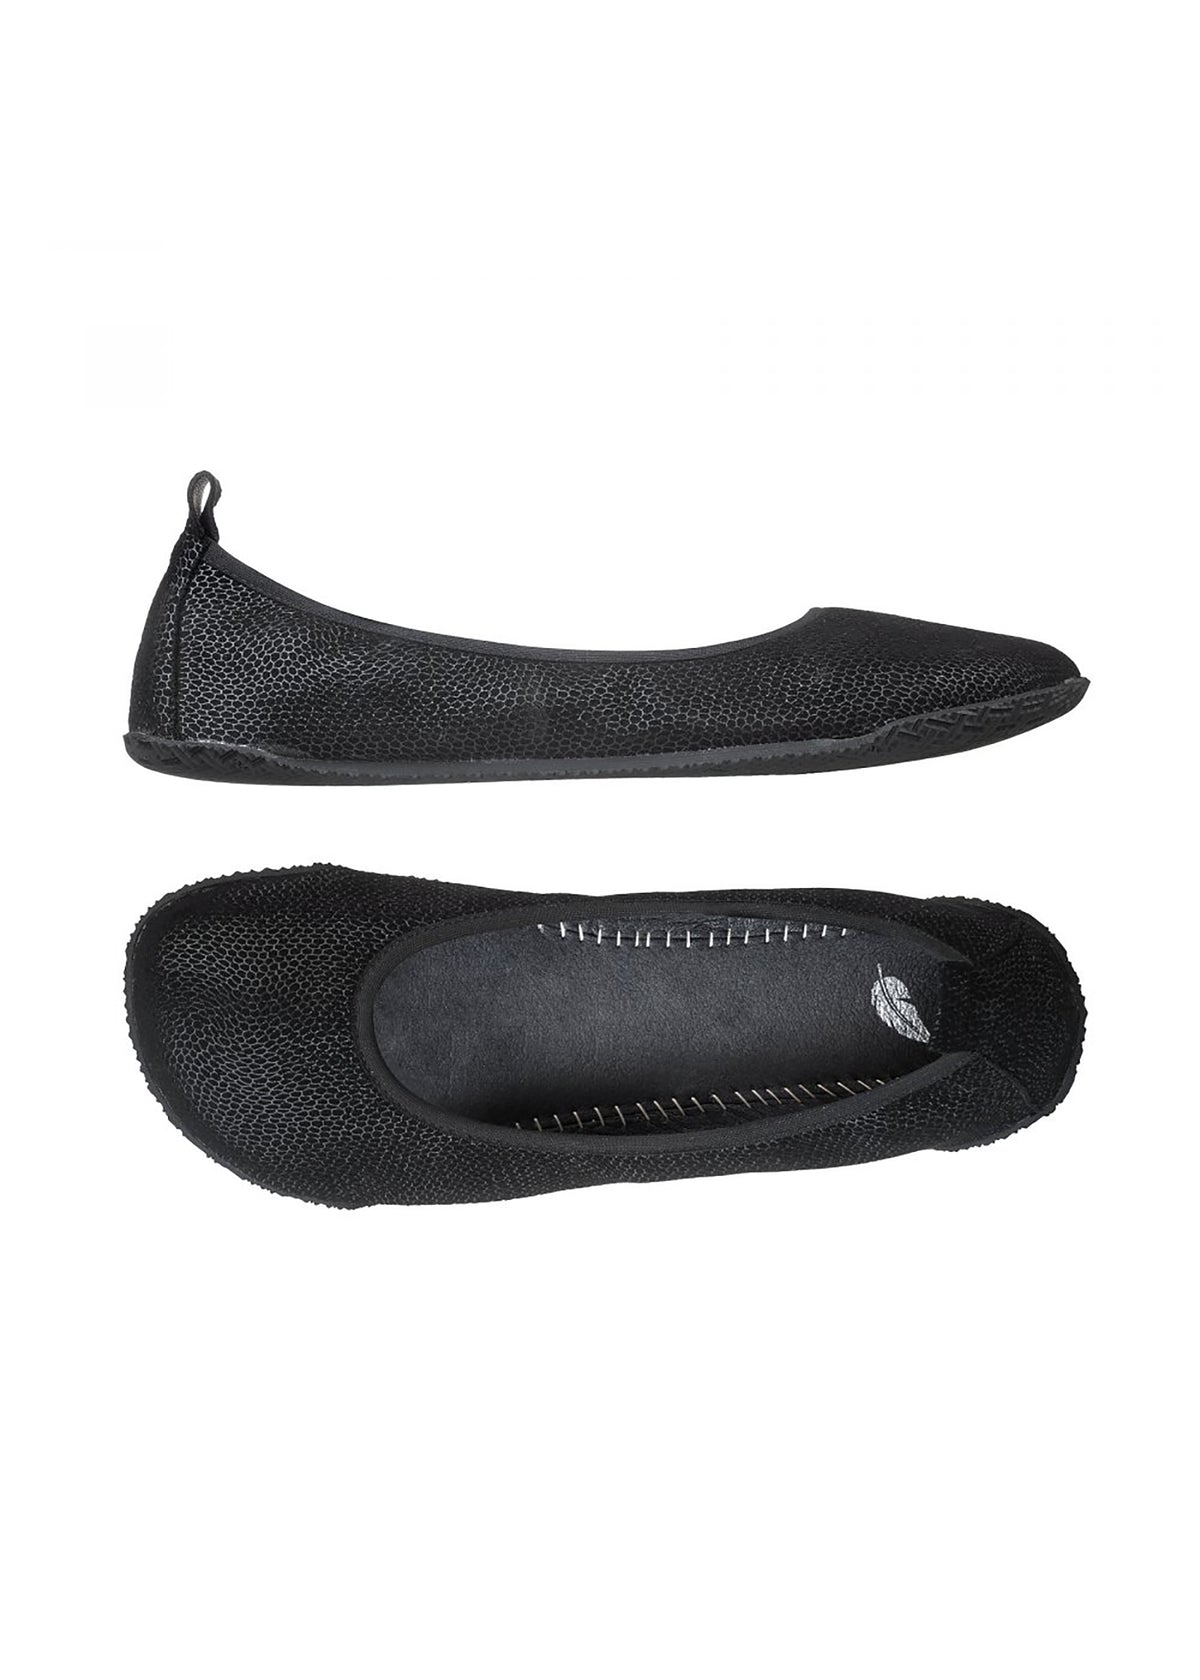 Barefoot shoes, ballerinas - Petite Twinkle, black shiny leather